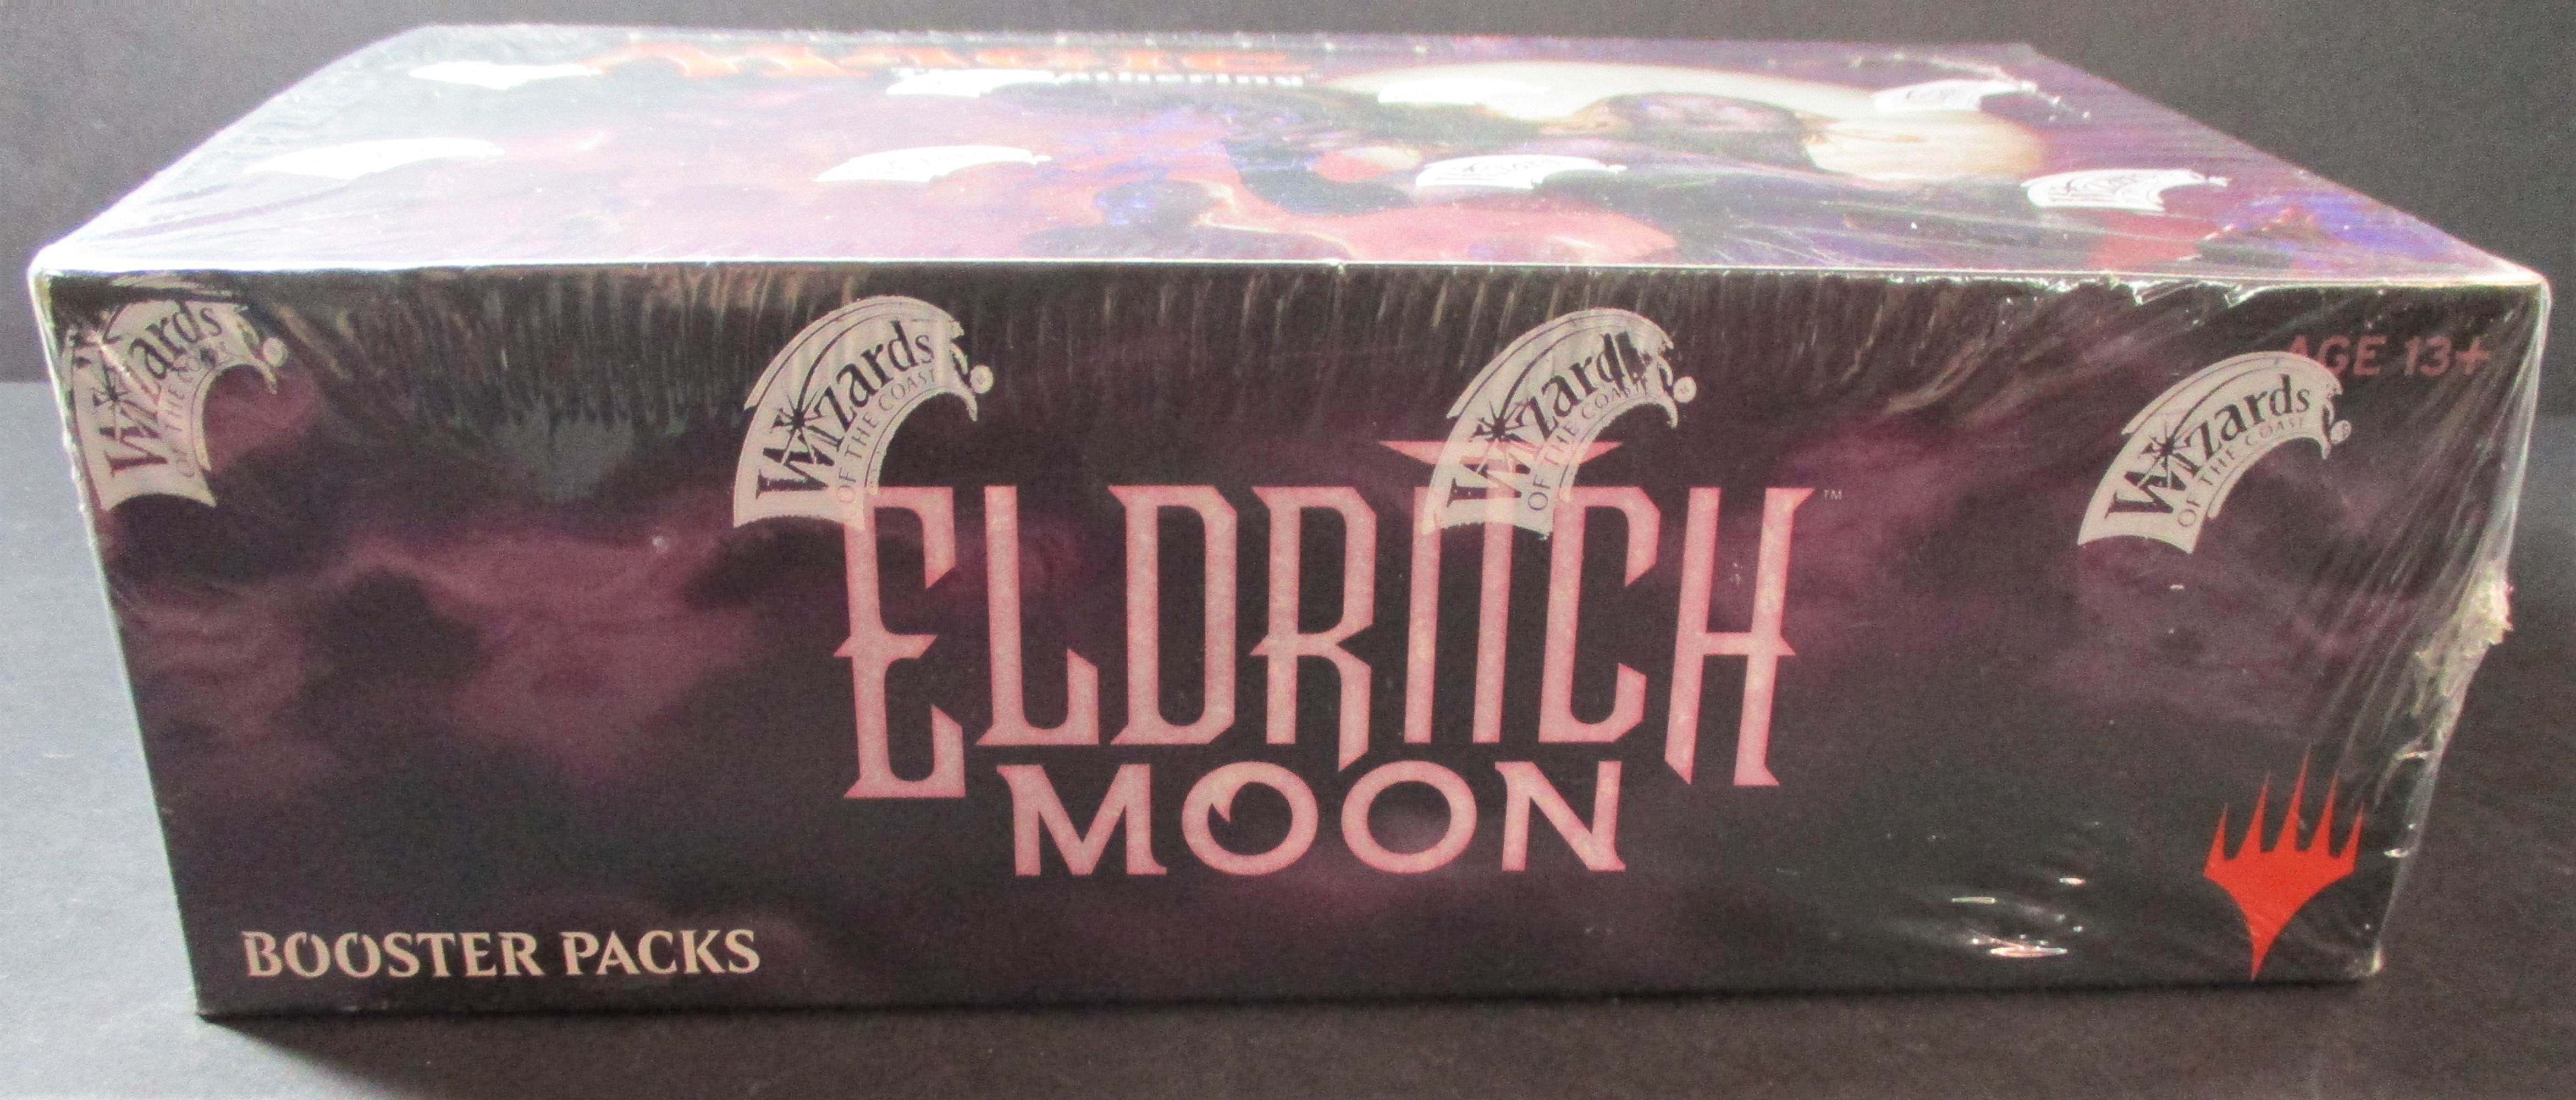 Eldritch Moon Booster Box SEALED